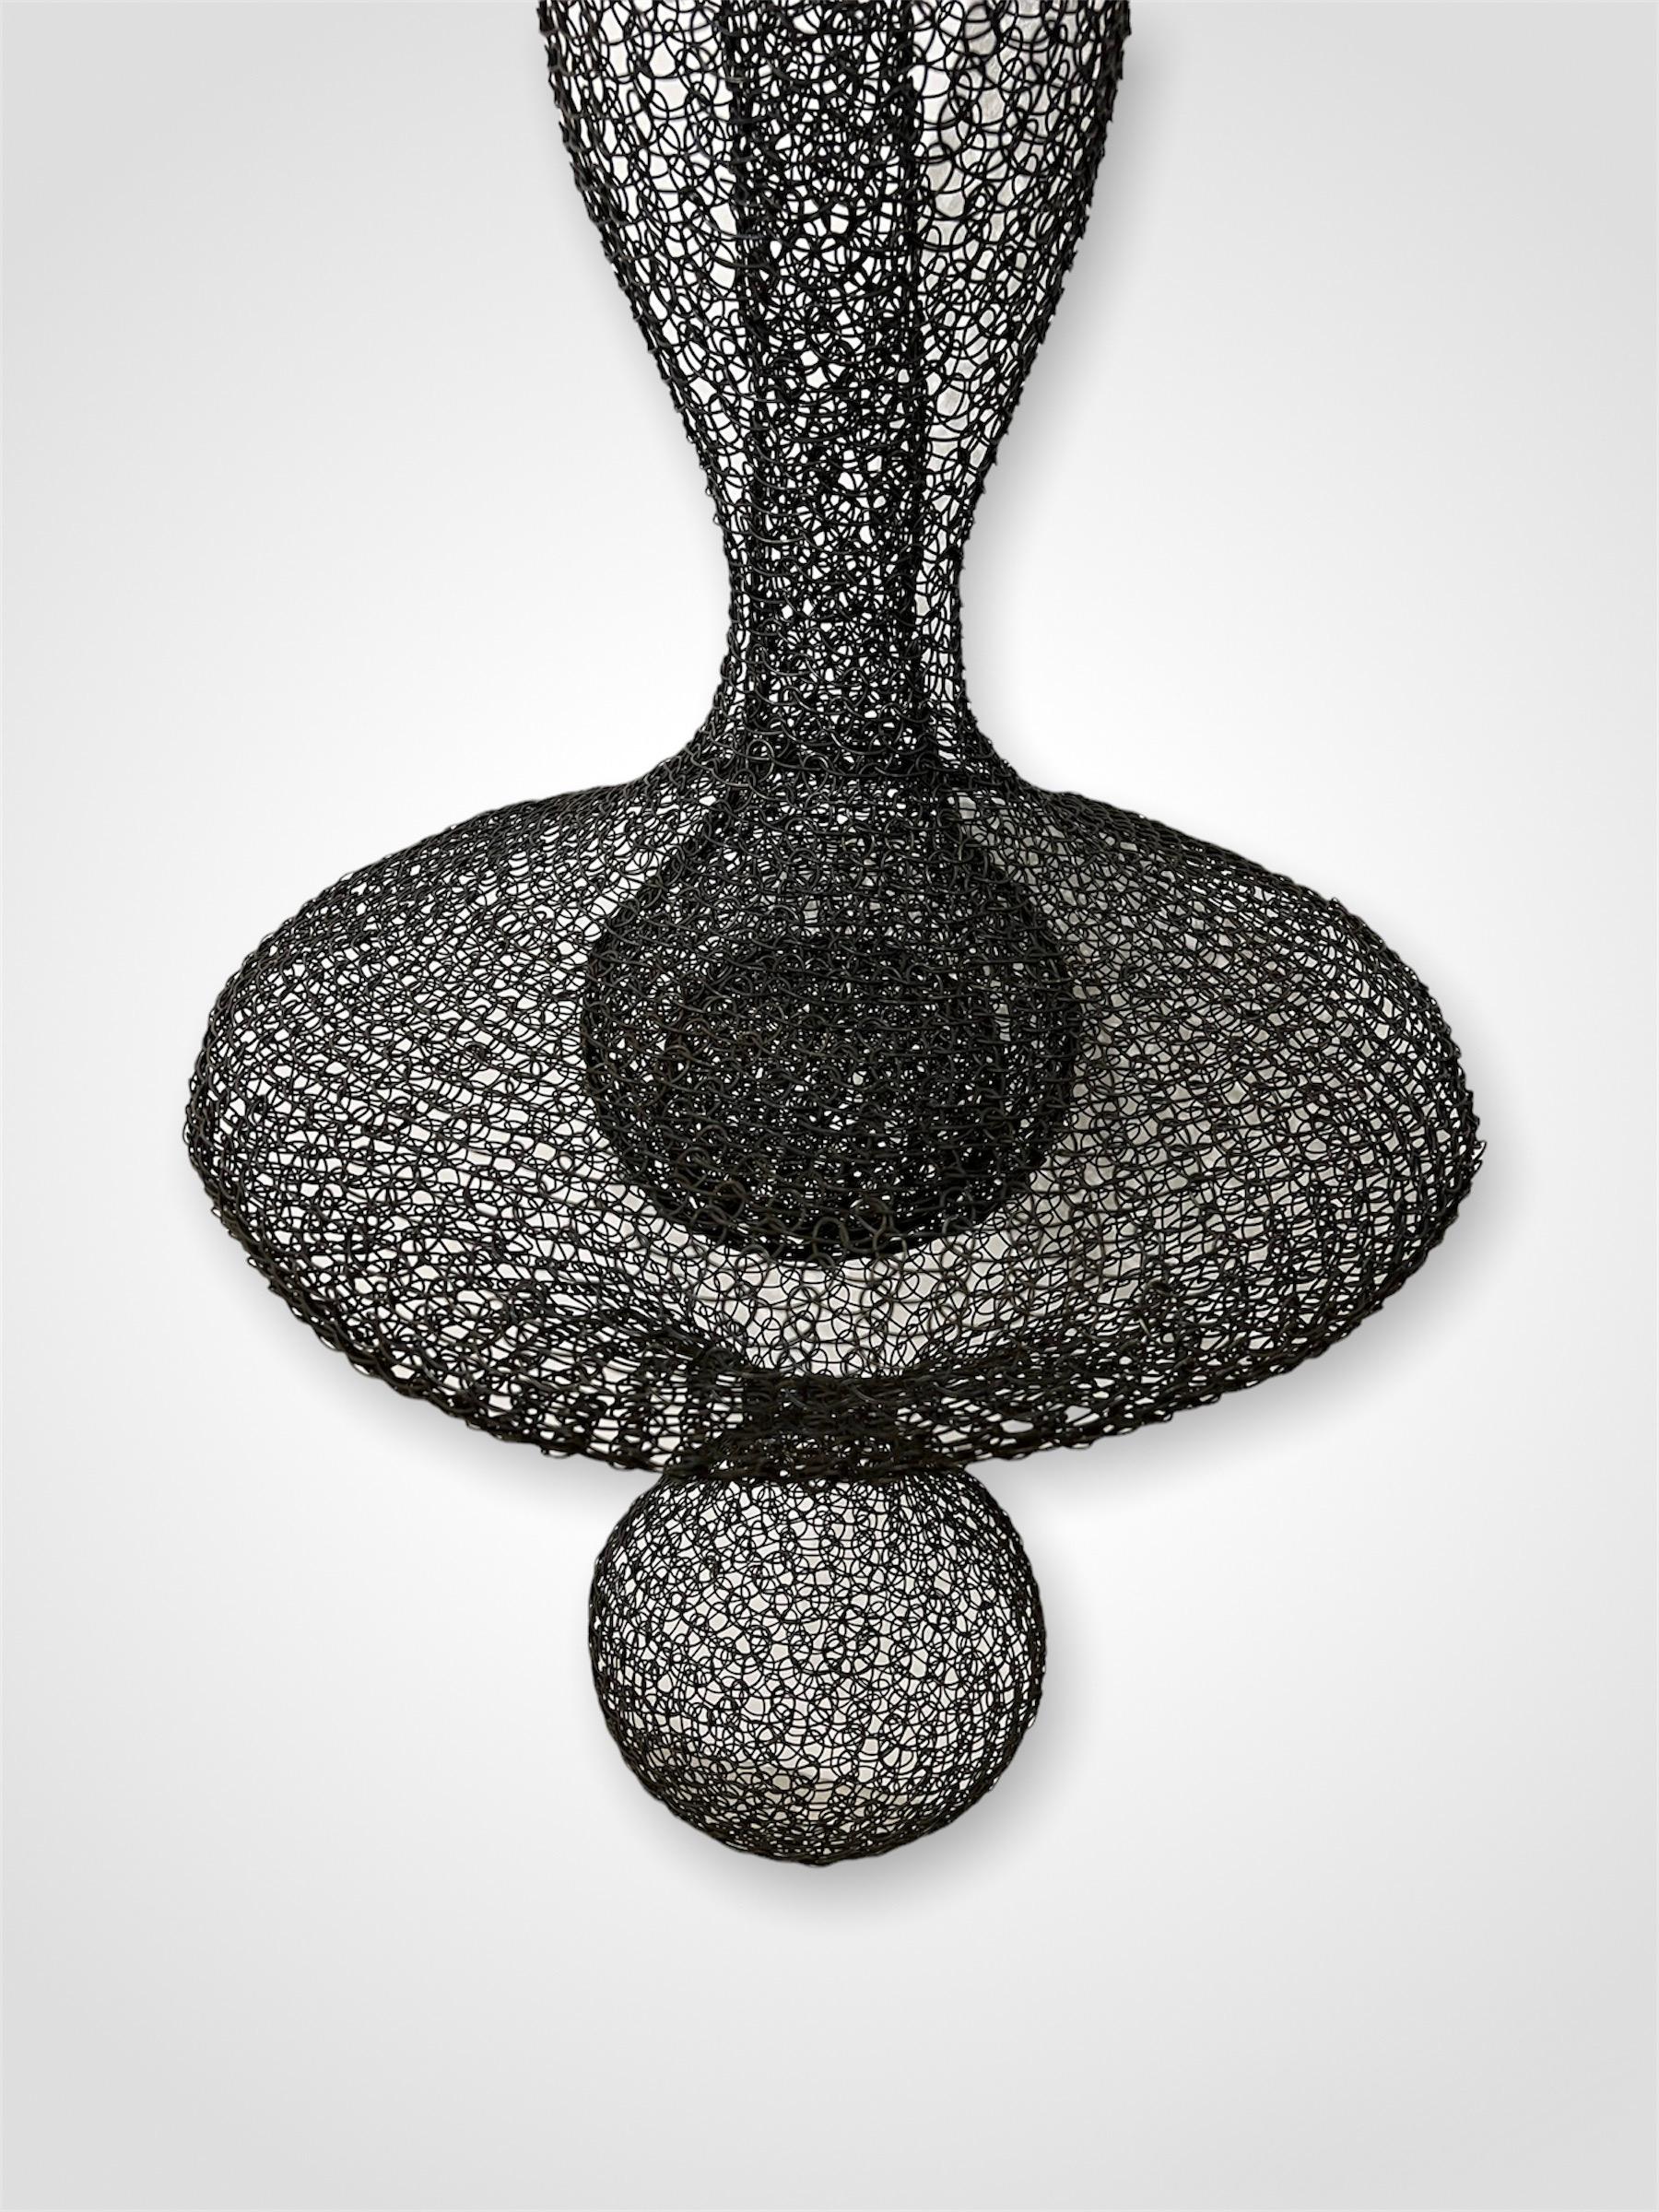 Modern Organic Woven Mesh Wire Sculpture by Ulrikk Dufosse For Sale